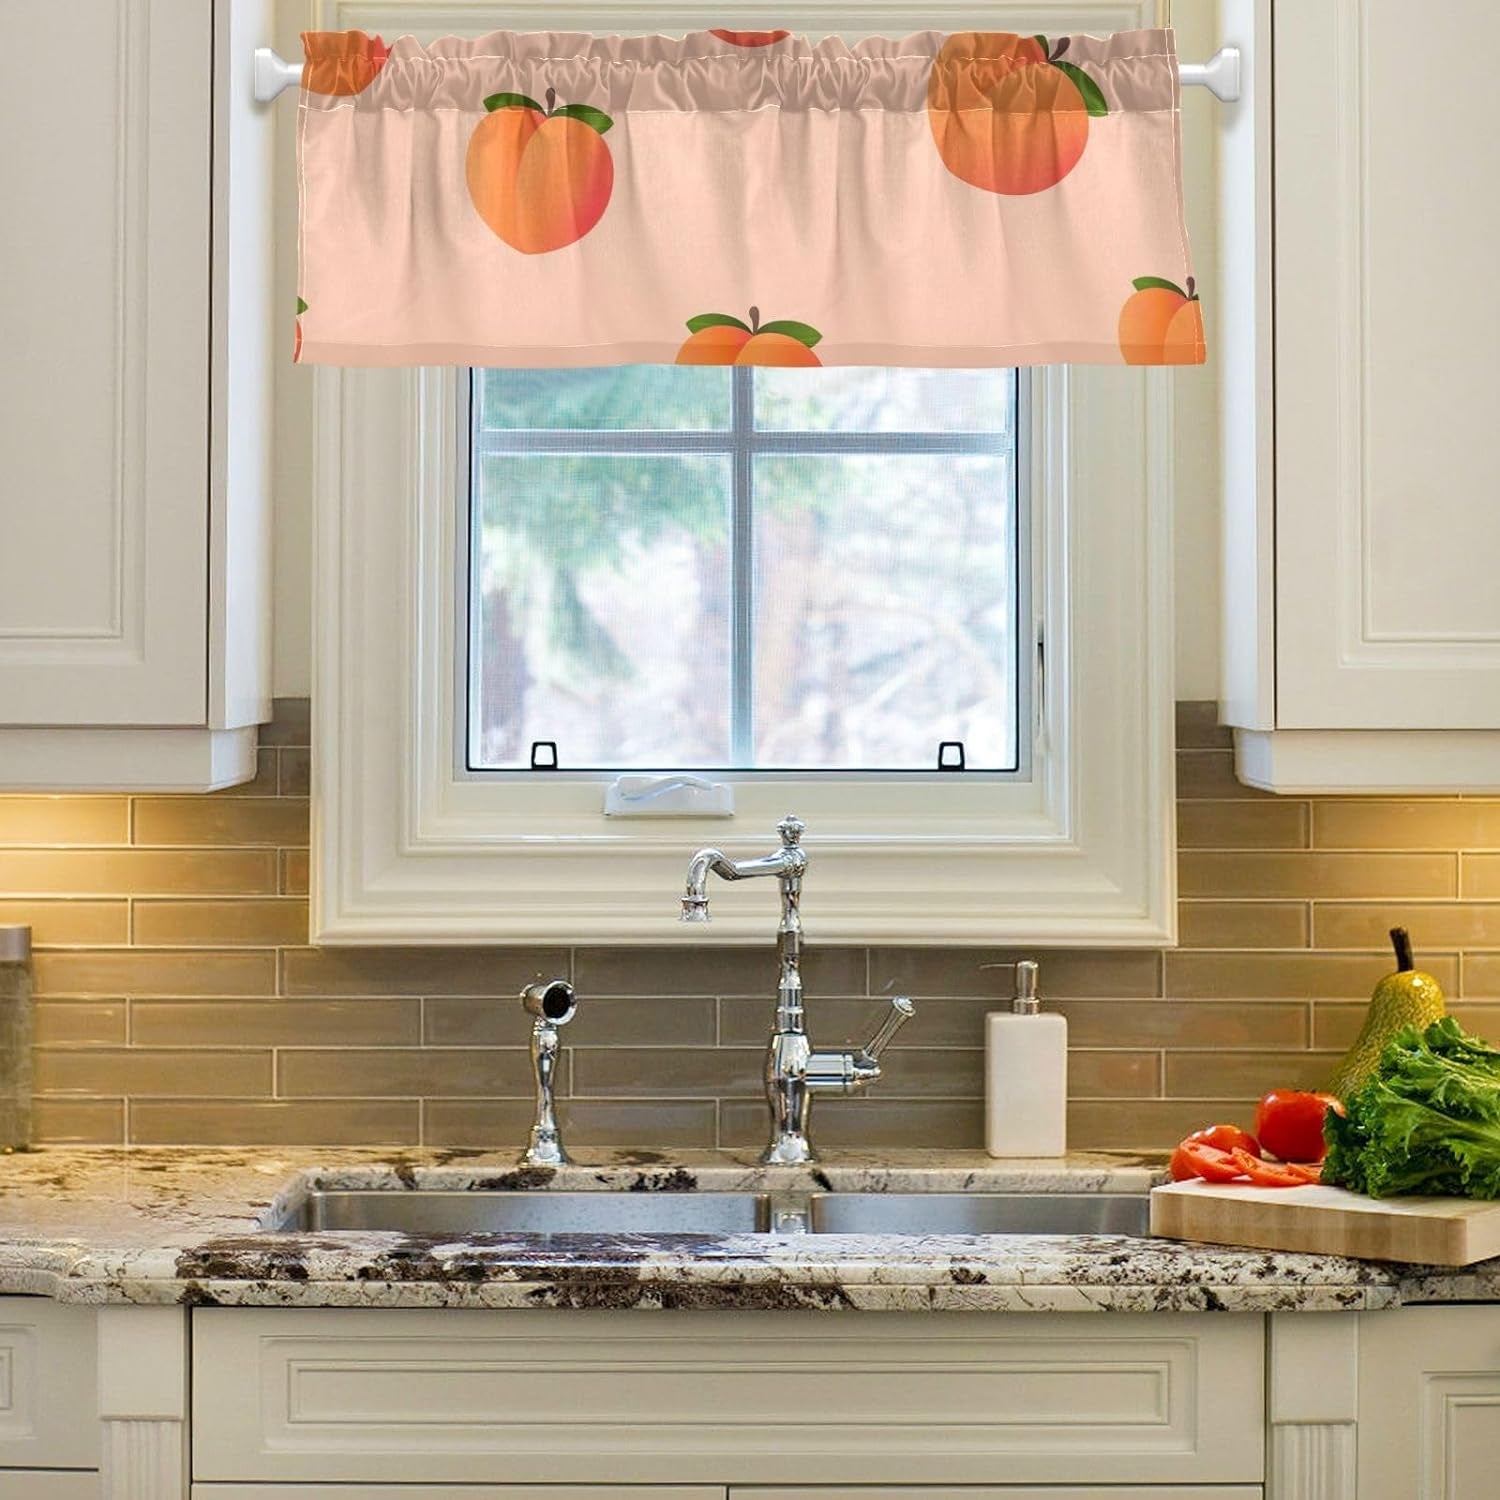 Pink Peach Fruit Kitchen Curtains for Kitchen Window Bedroom 54 by 18 Inch Kitchen Window Valance over Sink 1 Panel Window Scarf Valance